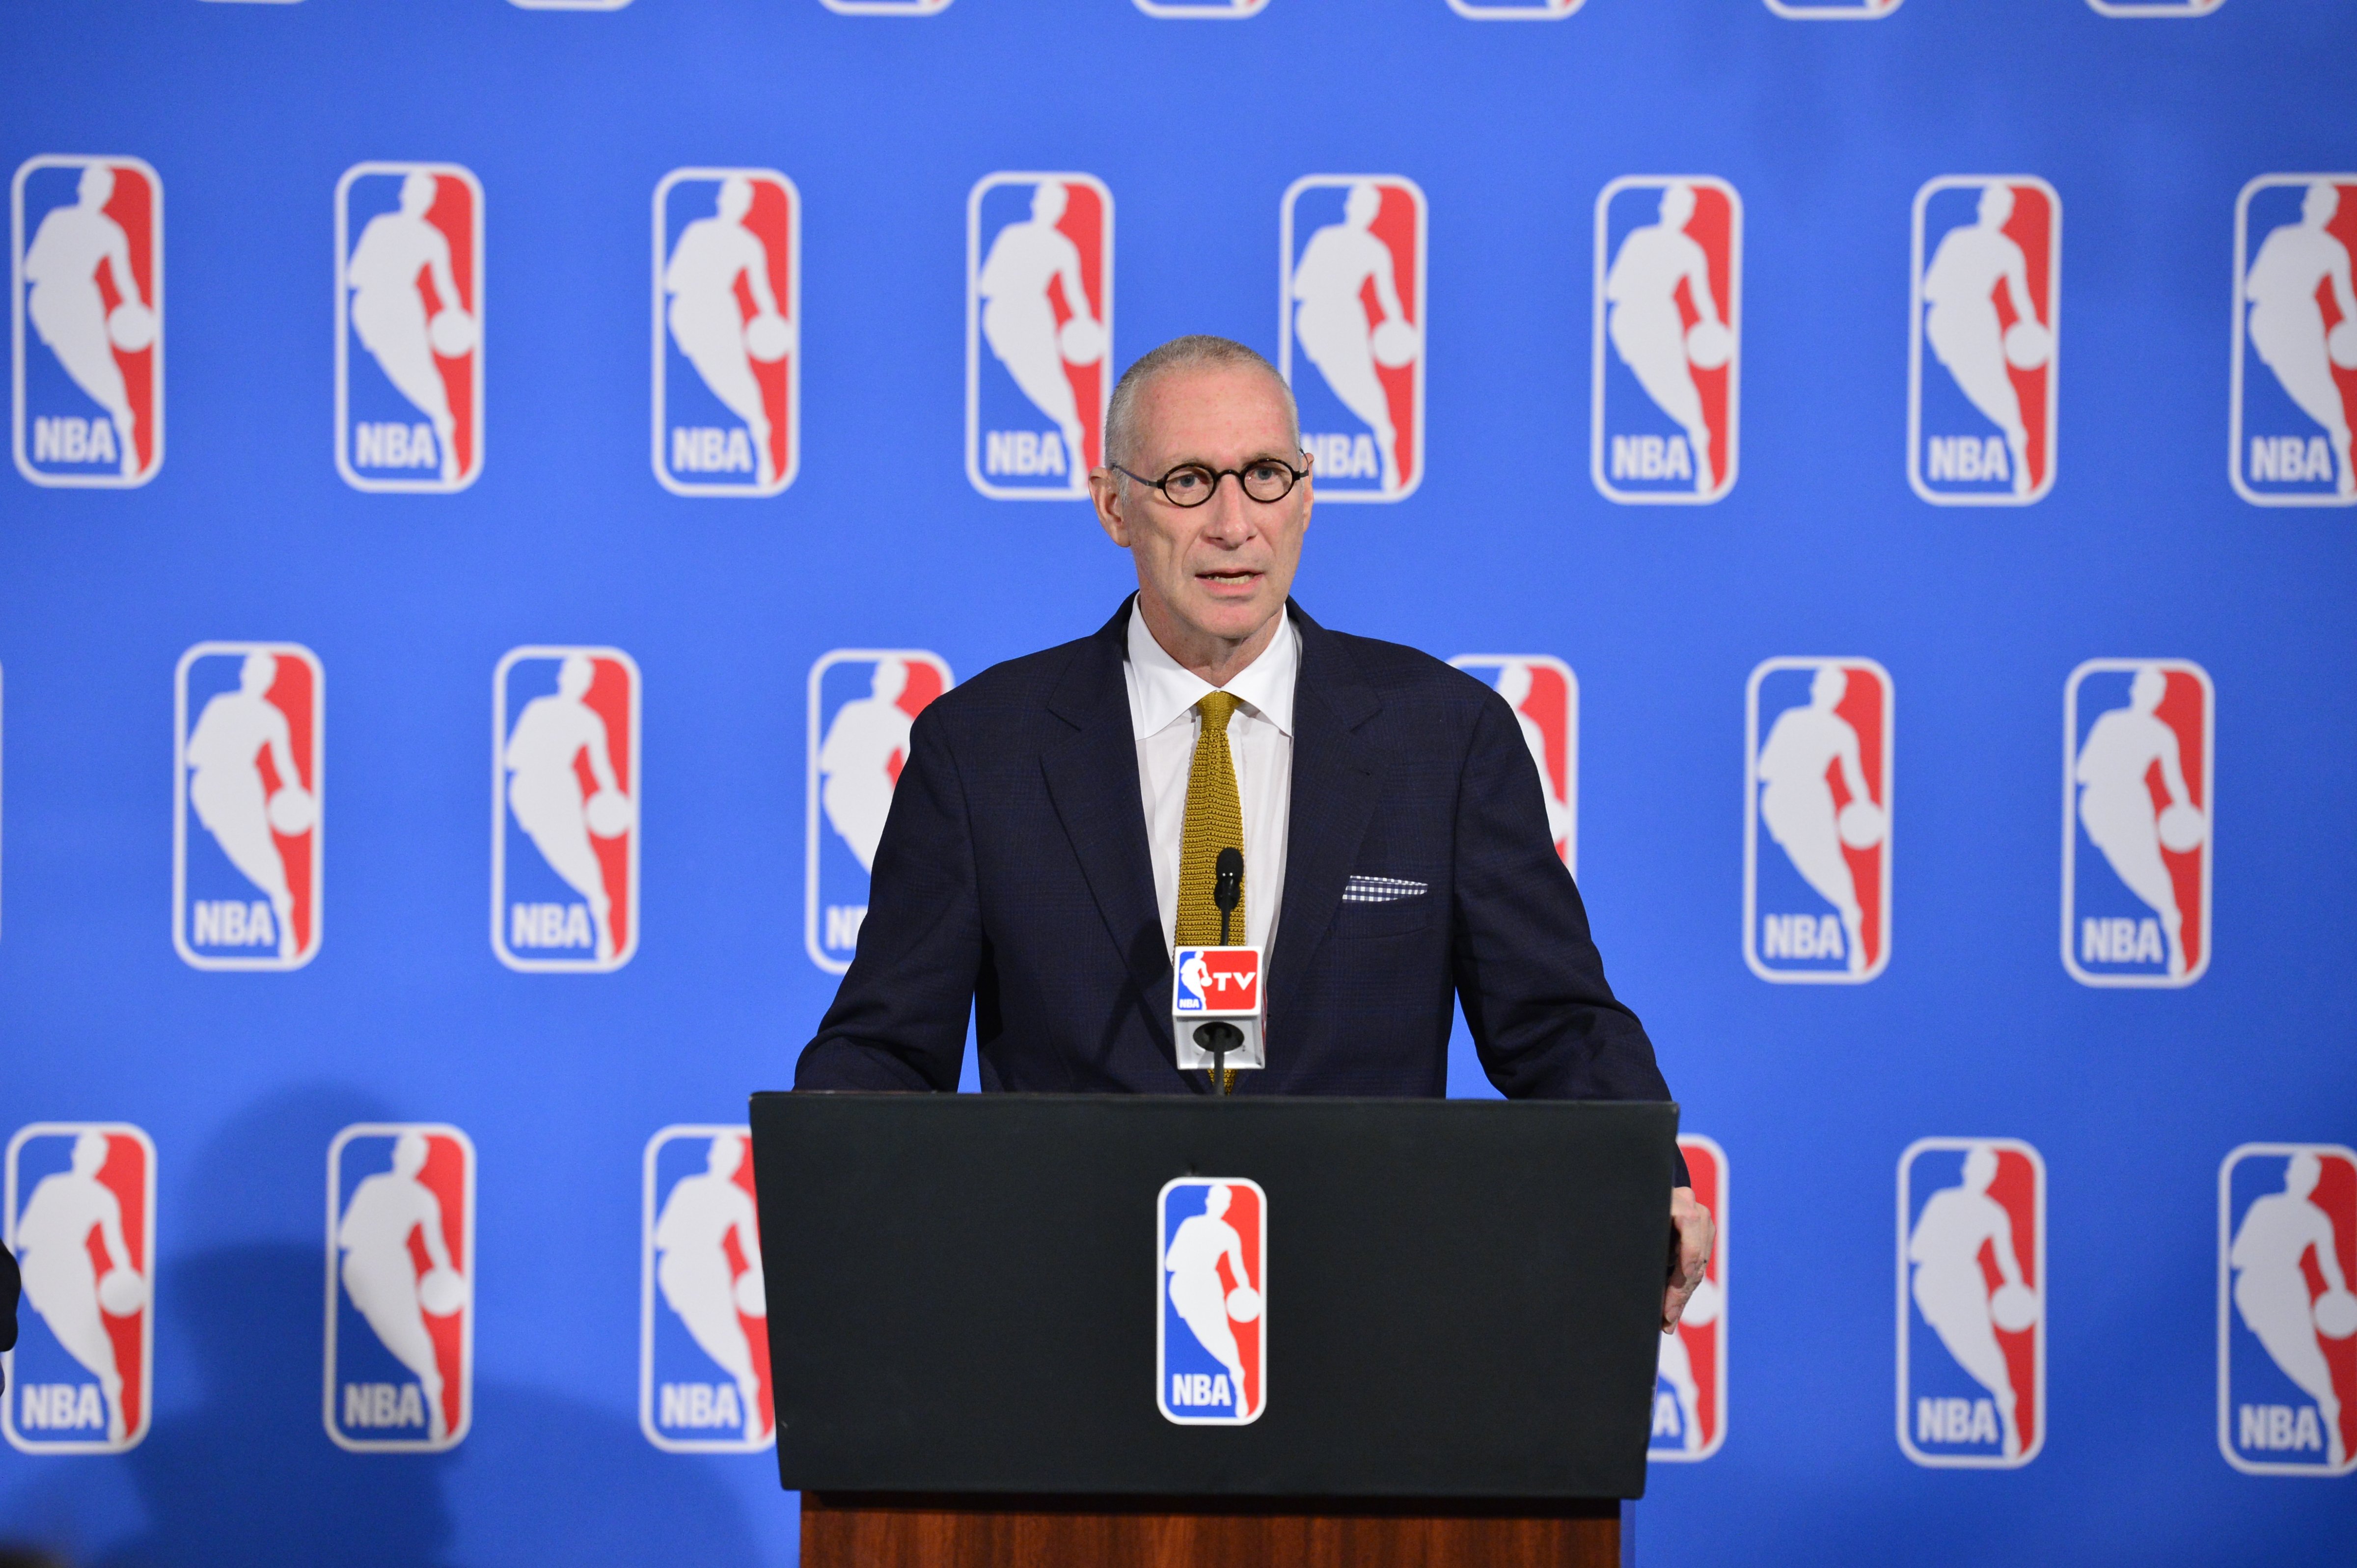 NBA Announces New Media Partnerships